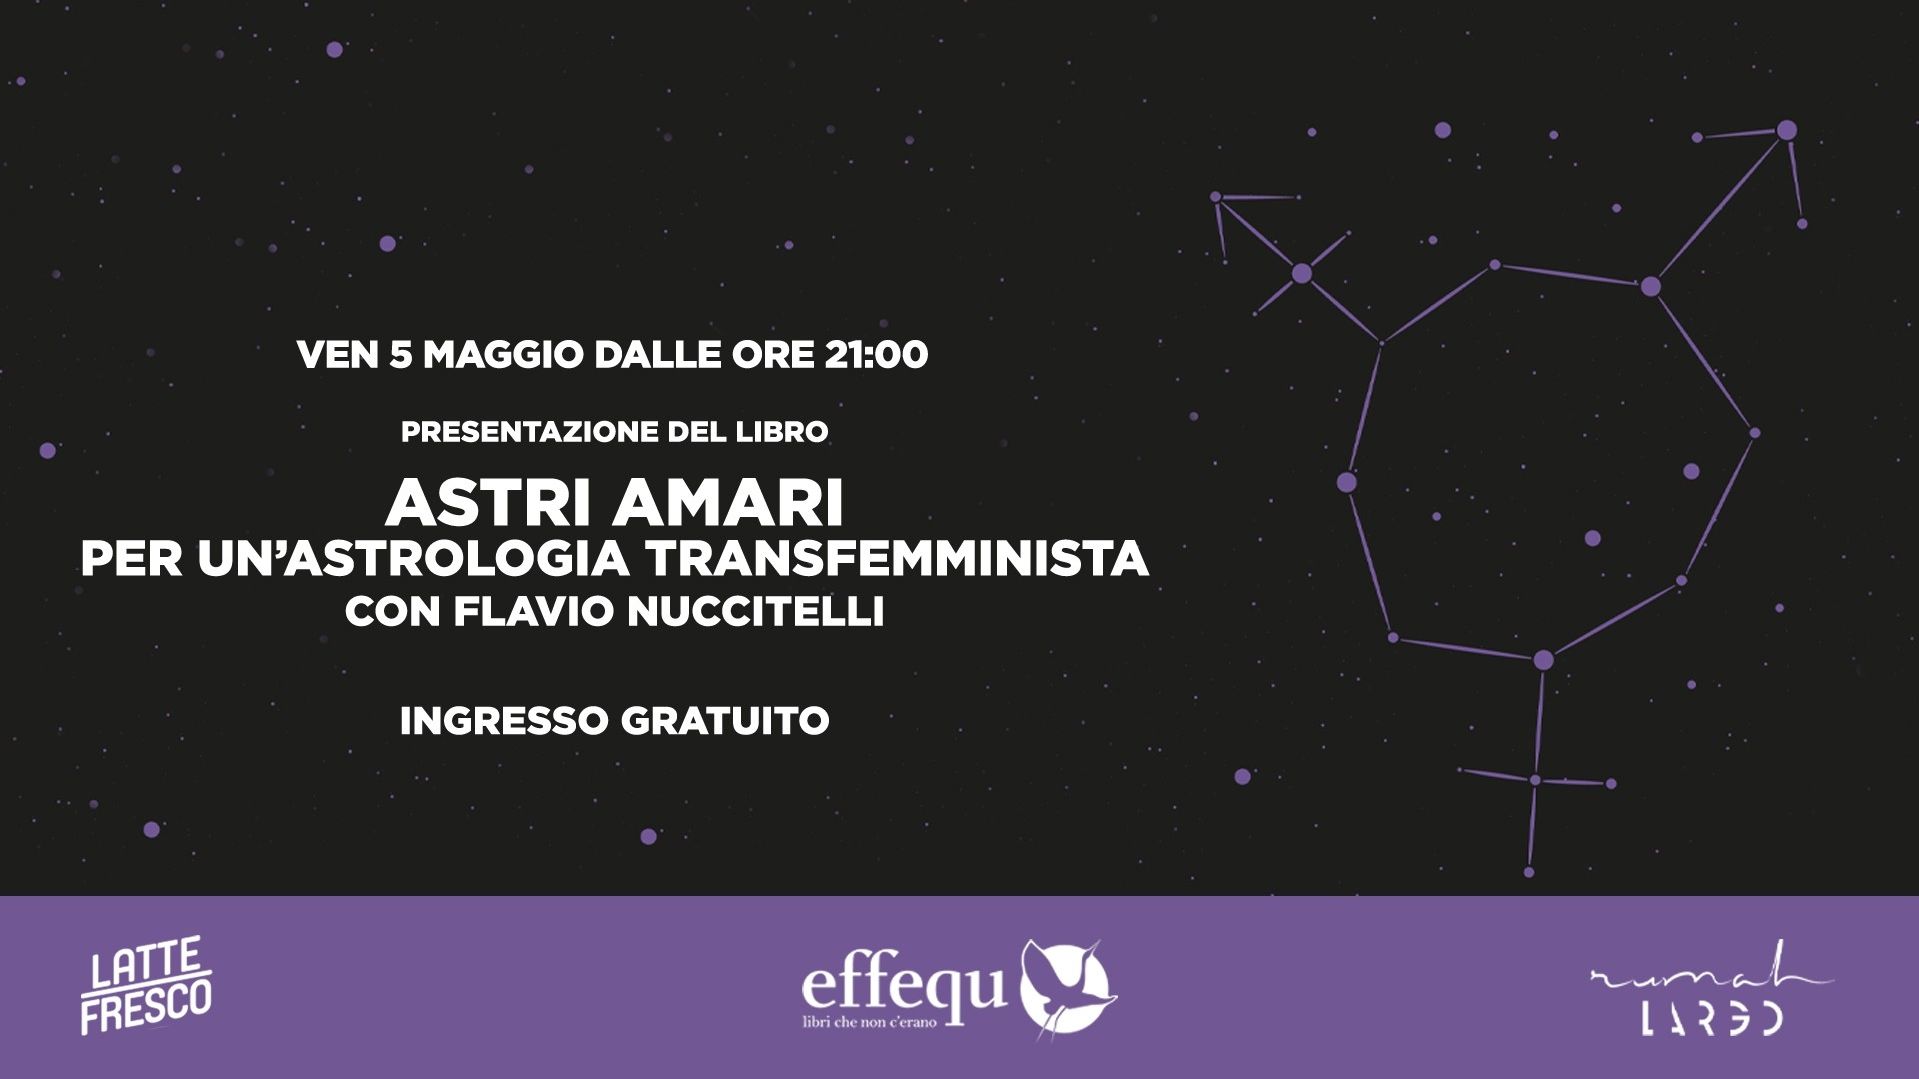 Astri Amari - Per un’astrologia transfemminista